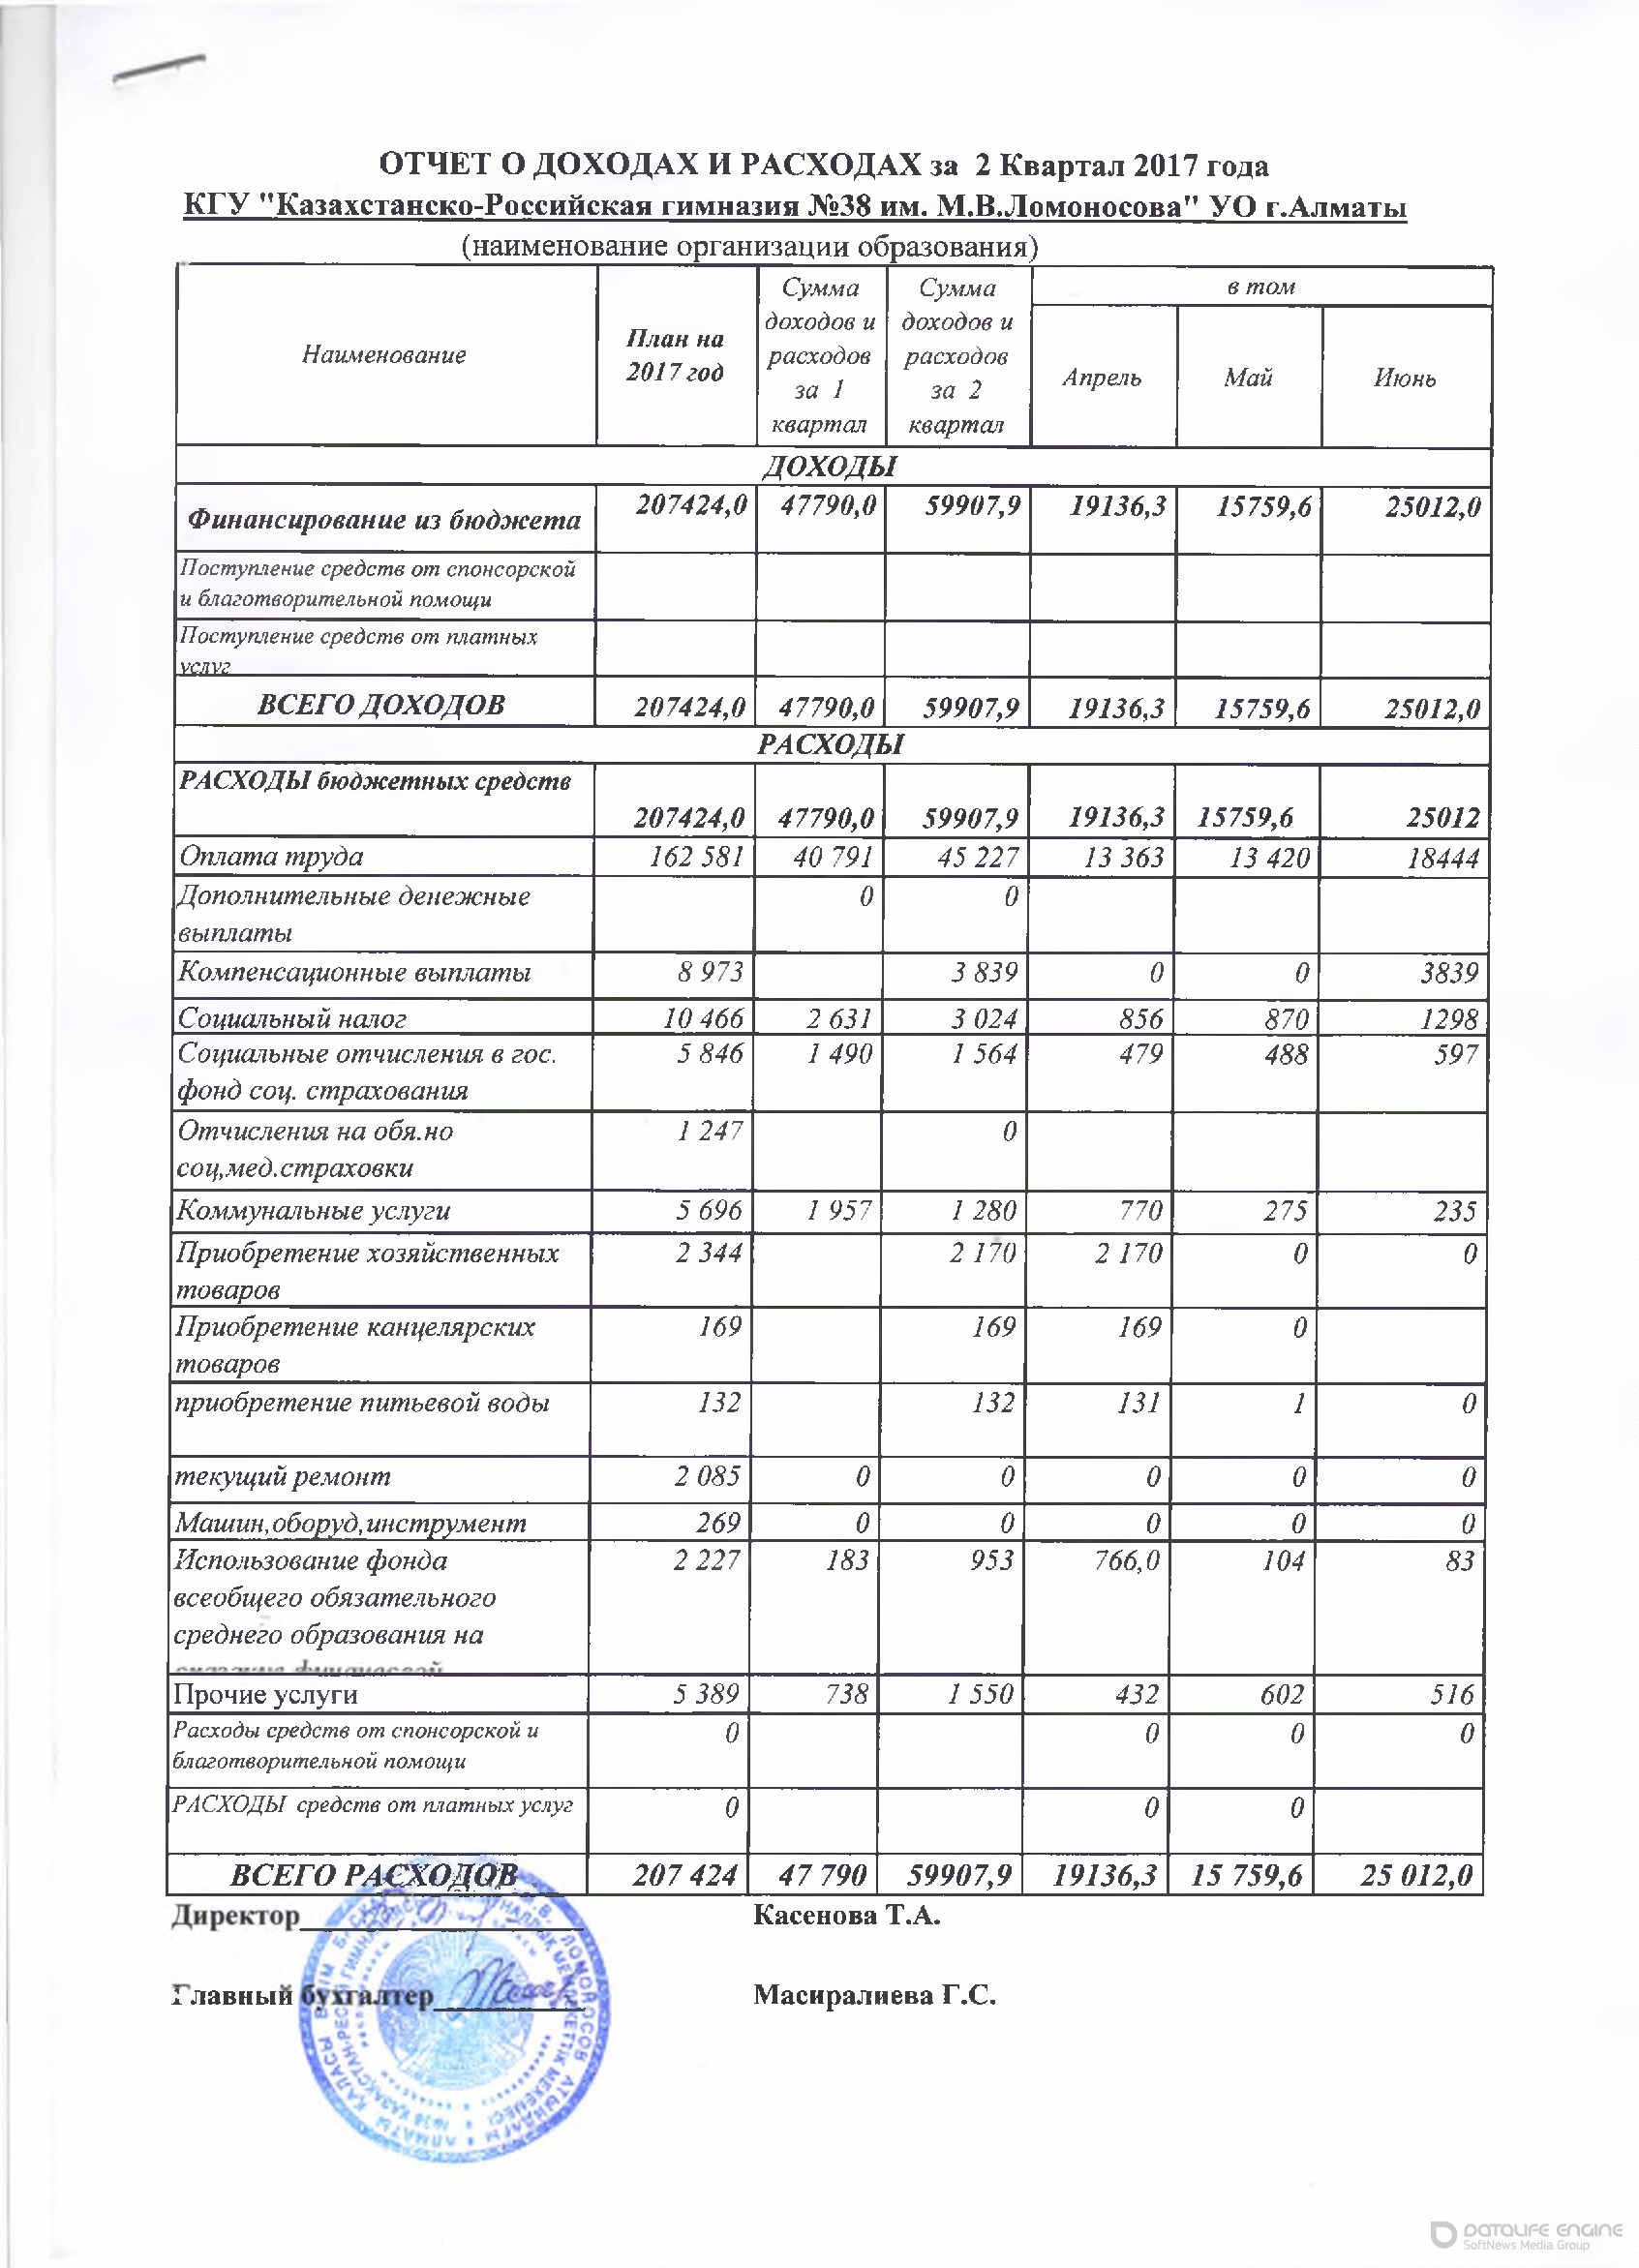 Отчет о доходах и расходах за 2 квартал 2017 г